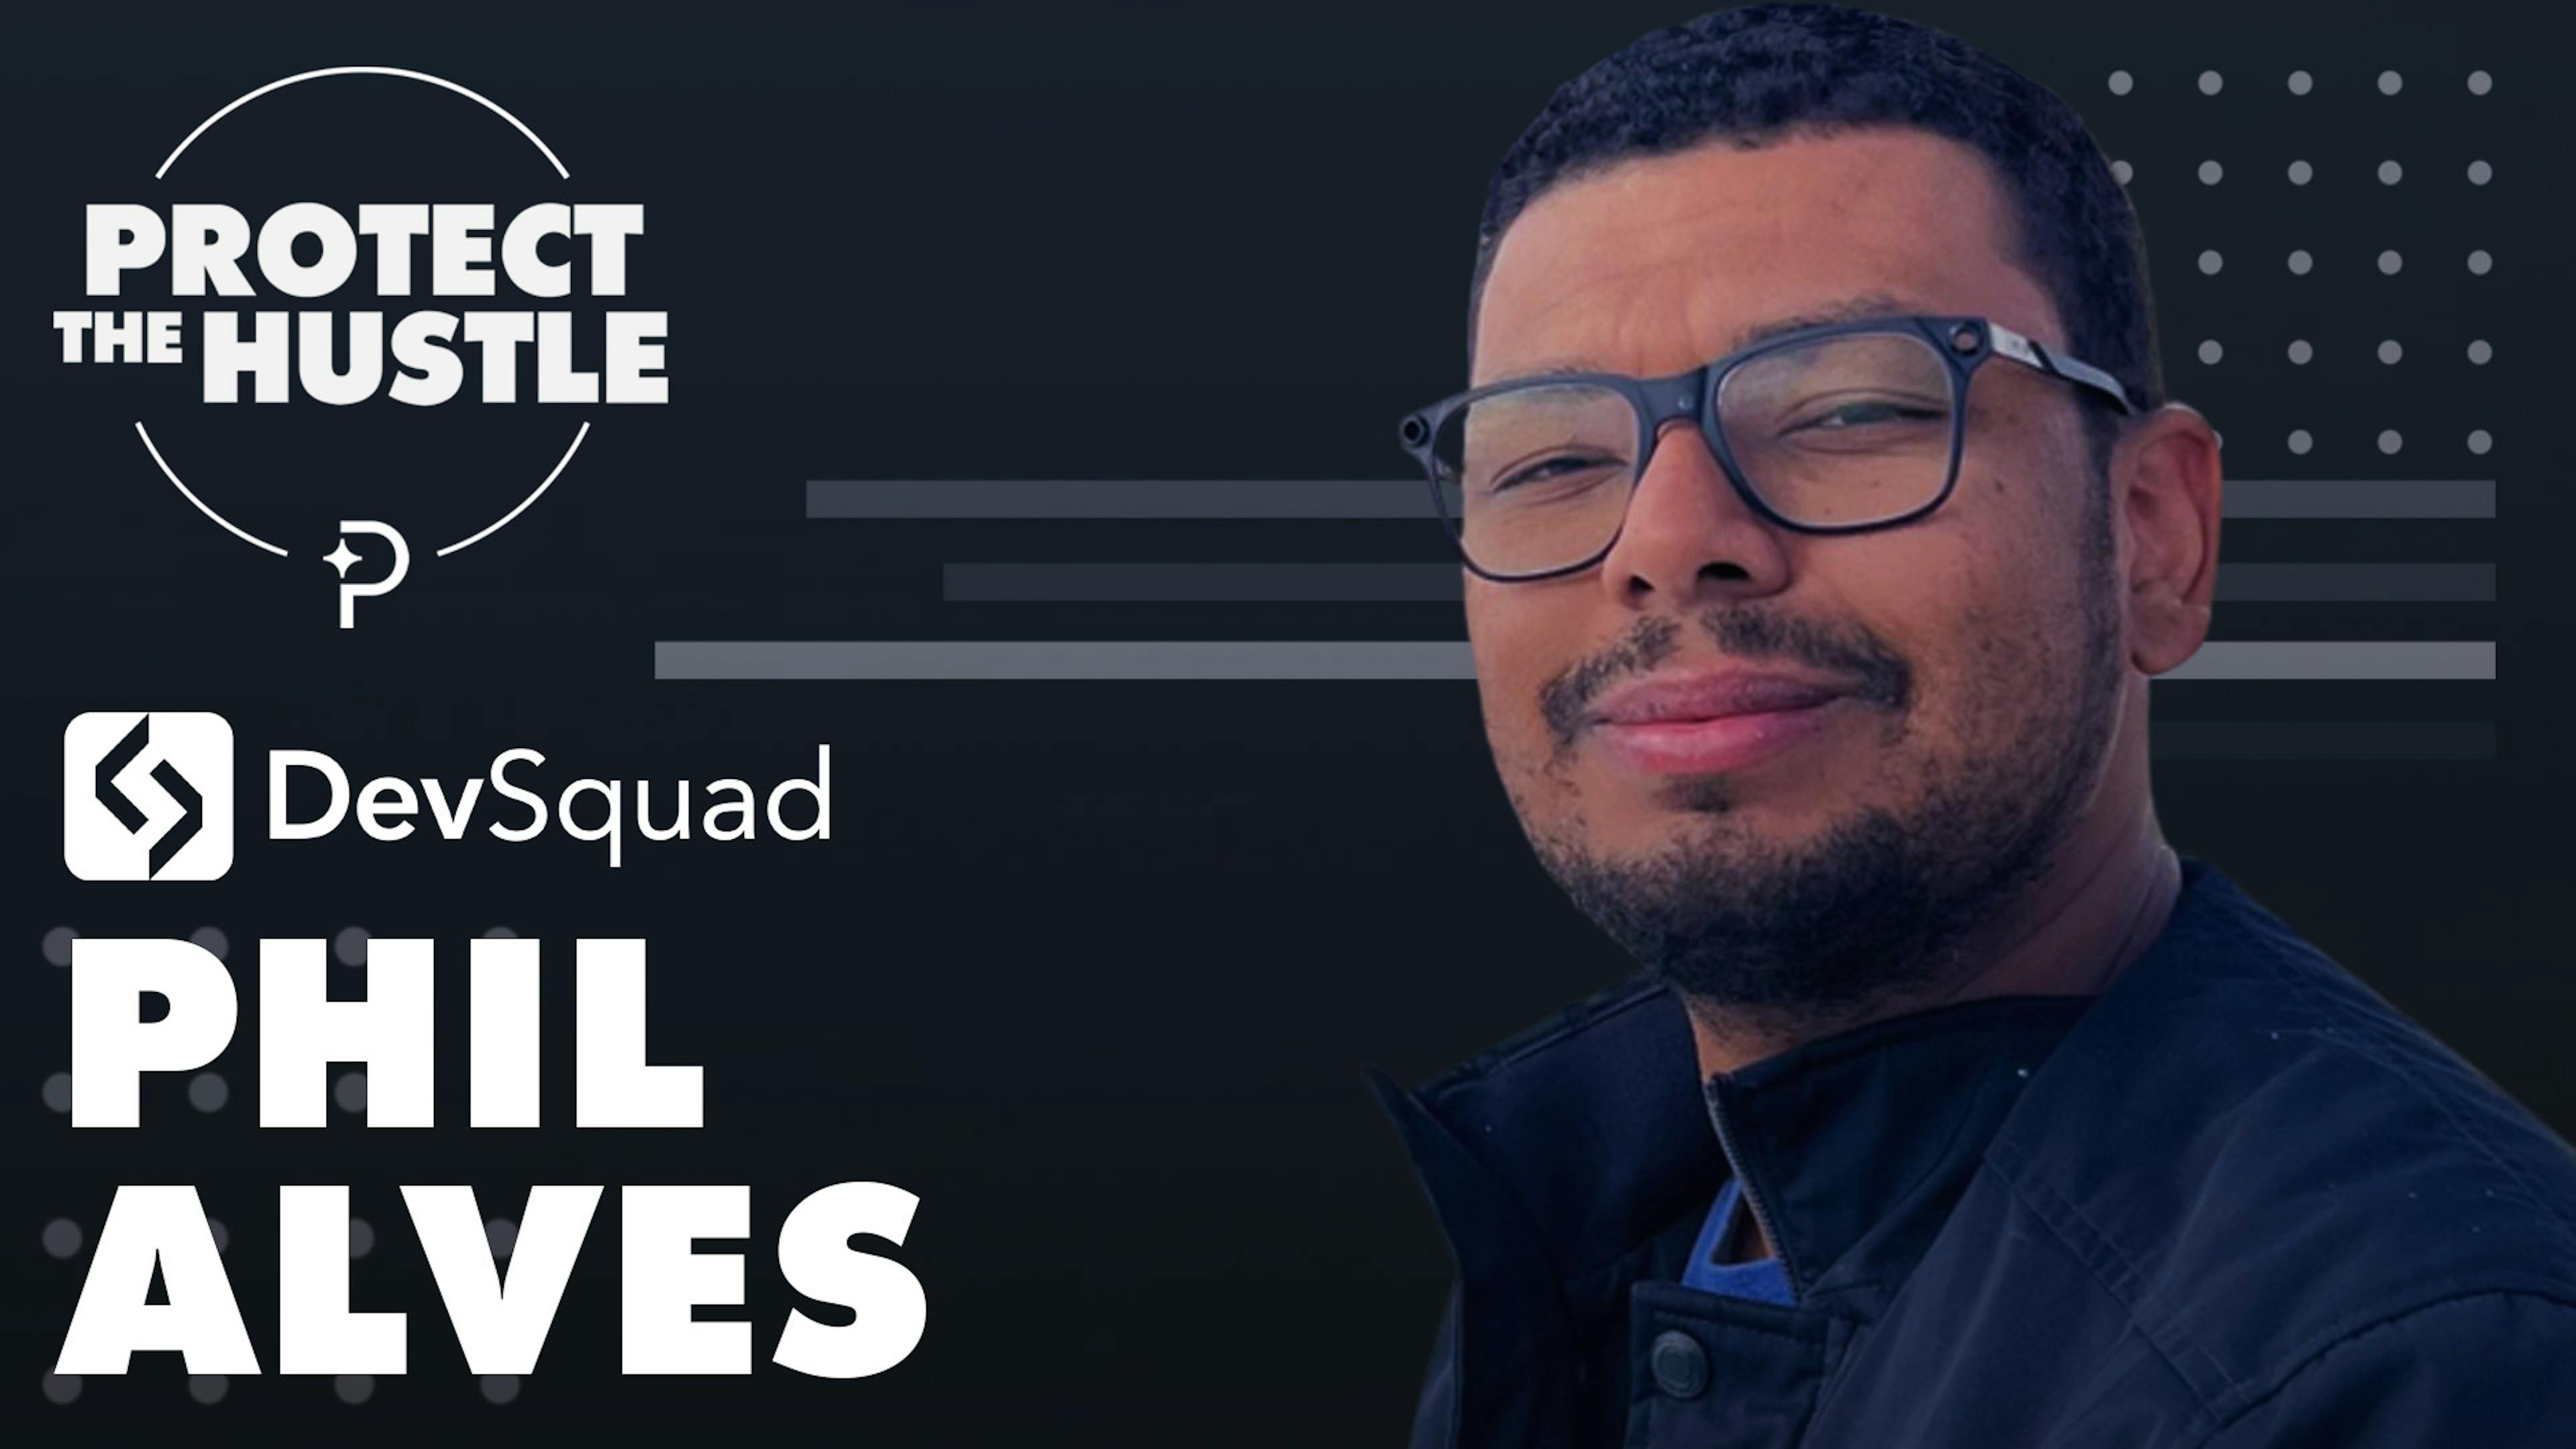 Protect the Hustle Thumbnail featuring DevSquad's Phil Alves